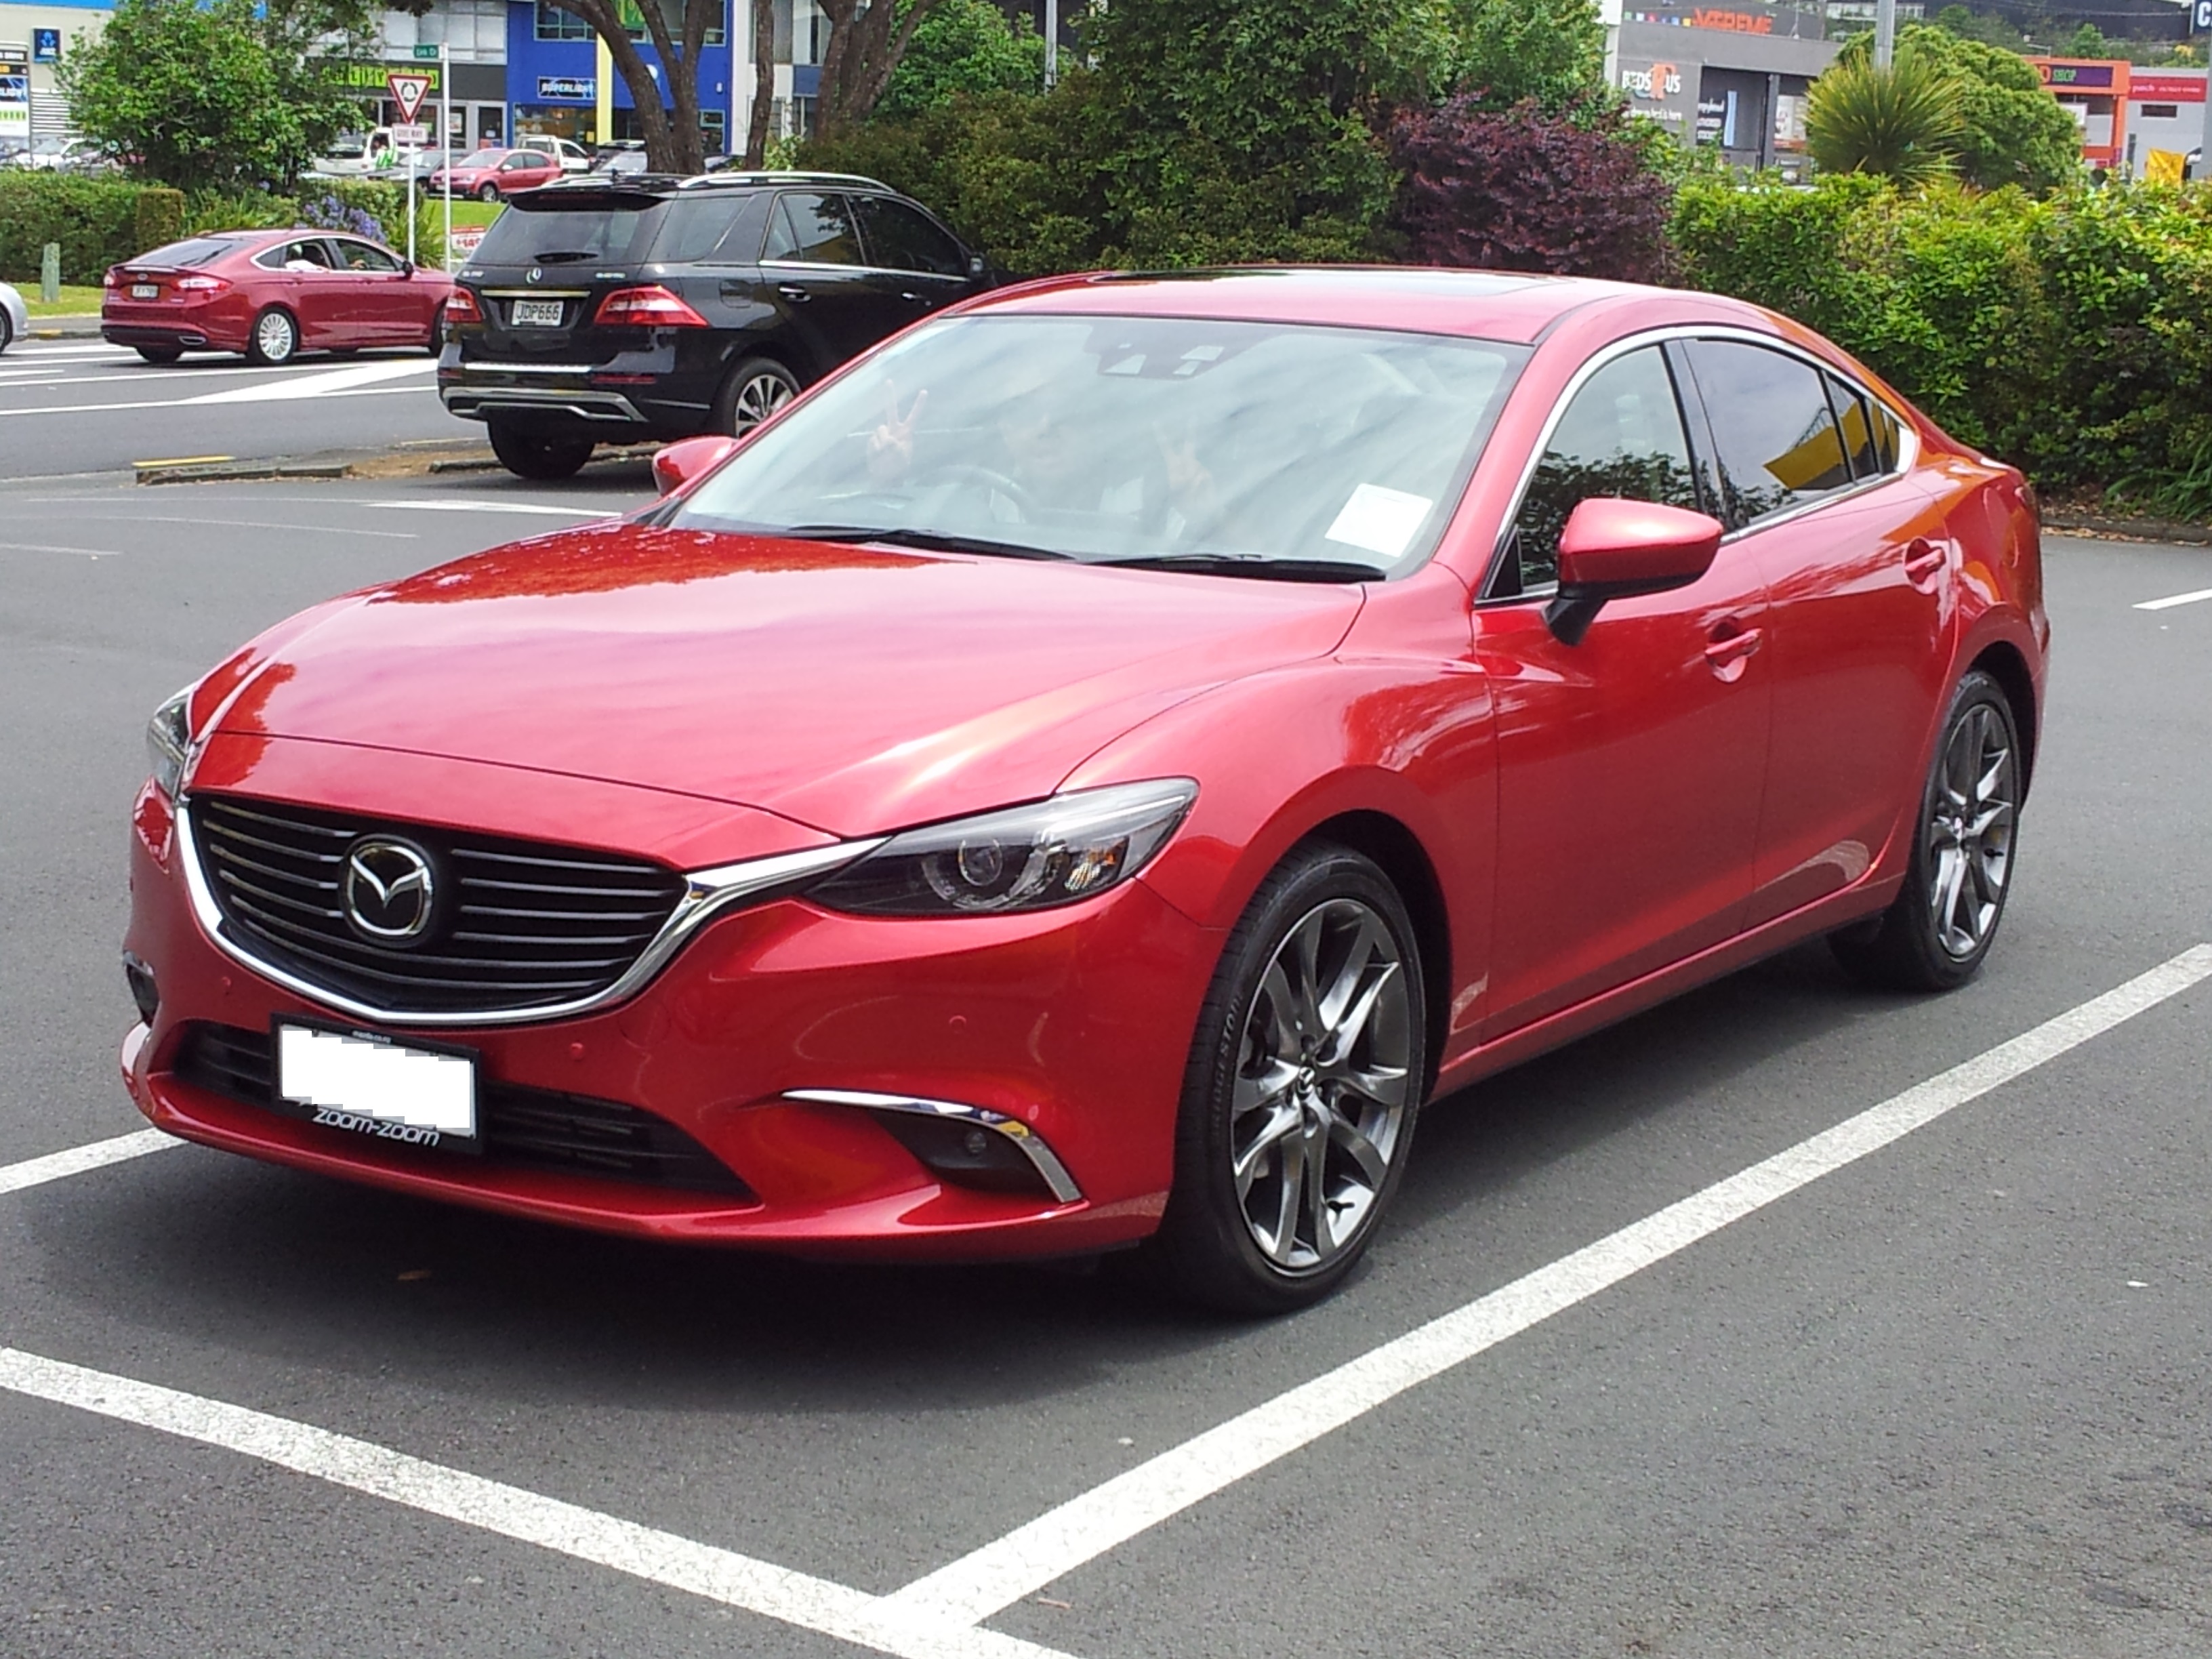 Review] 2015 Mazda6 "Limited" Sedan - NZ TechBlog